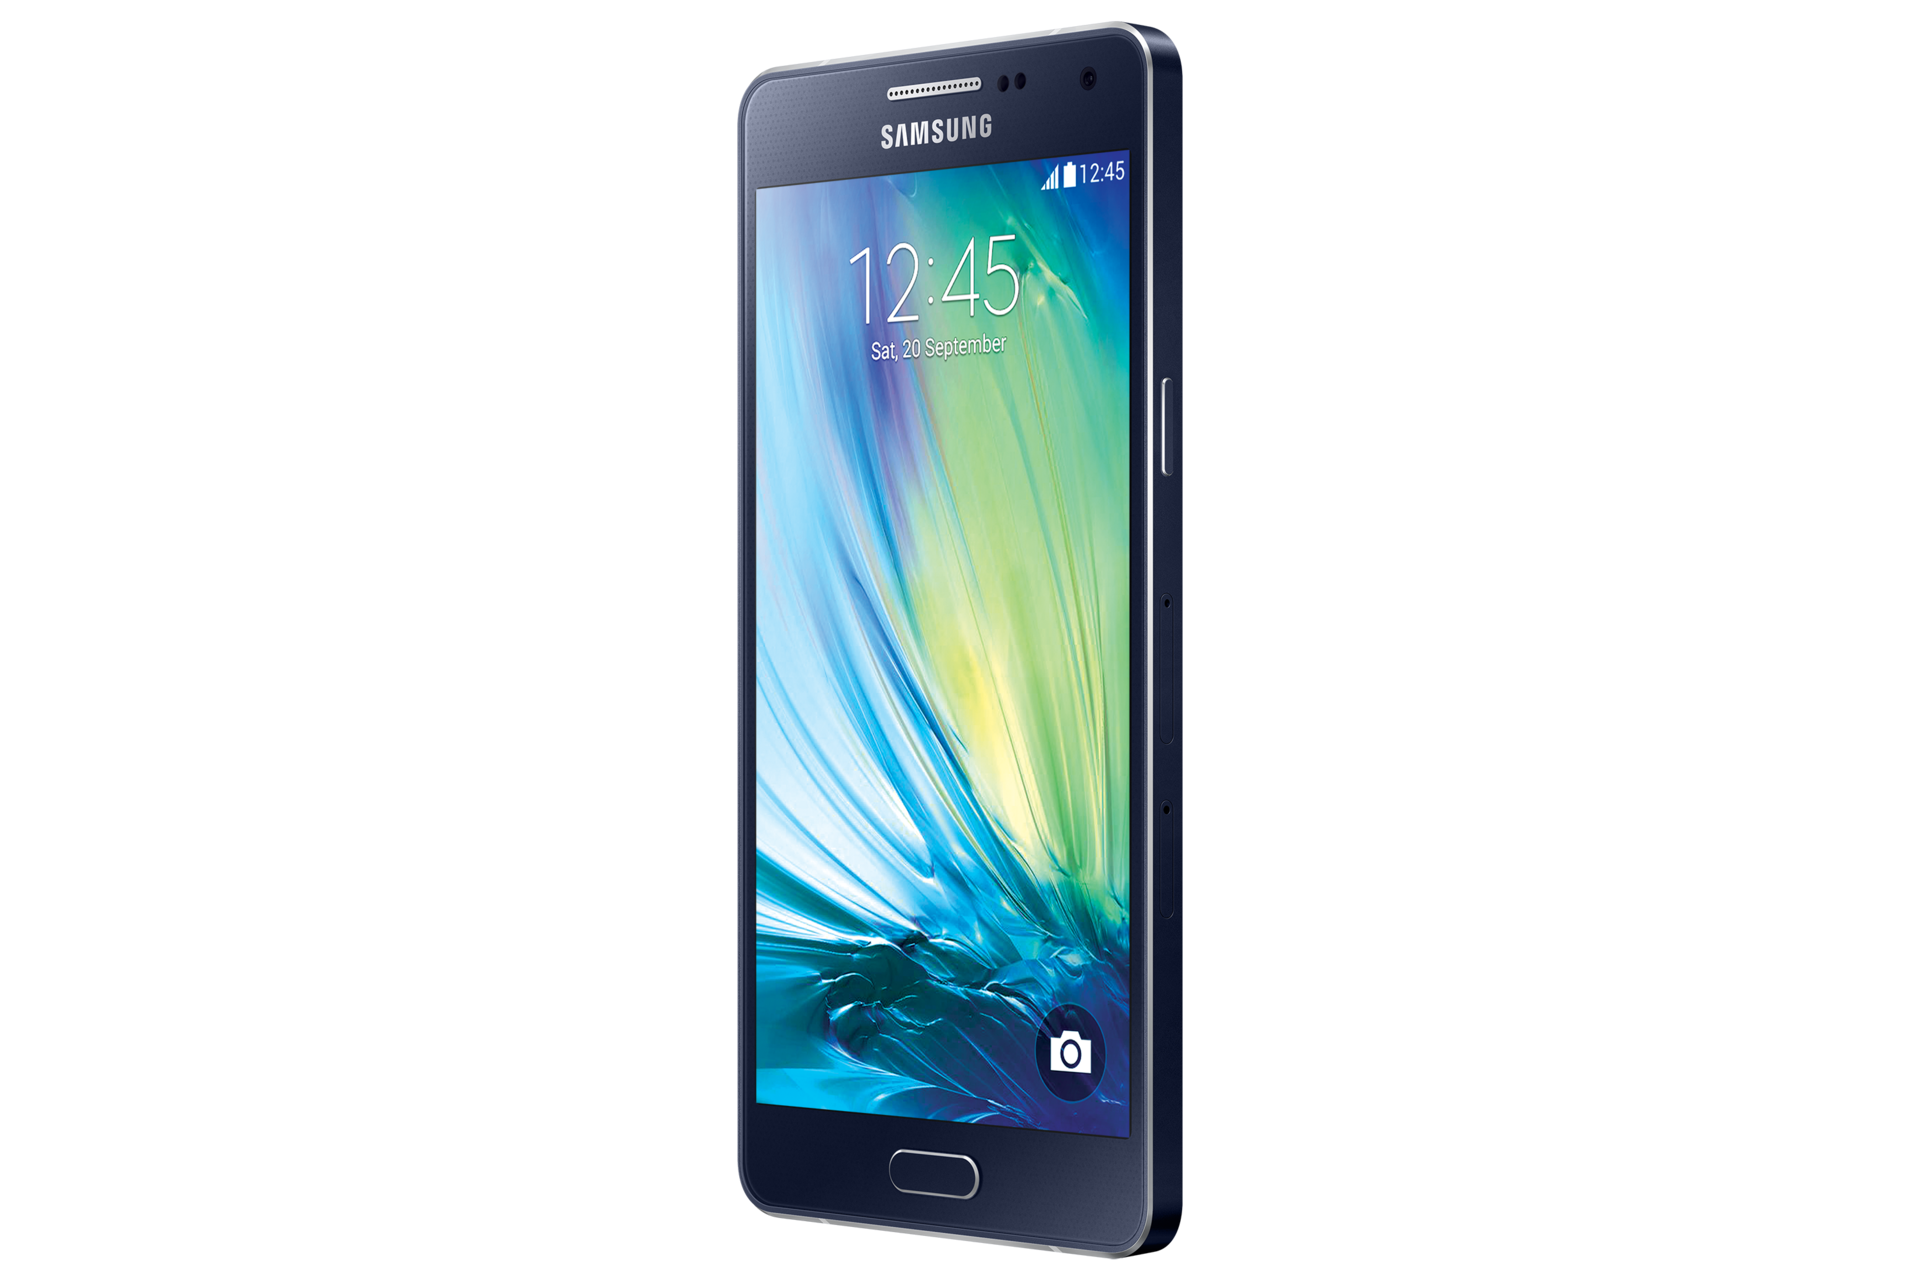 Samsung Galaxy A5 Price India Galaxy A5 Metal 5 Inch Smartphone